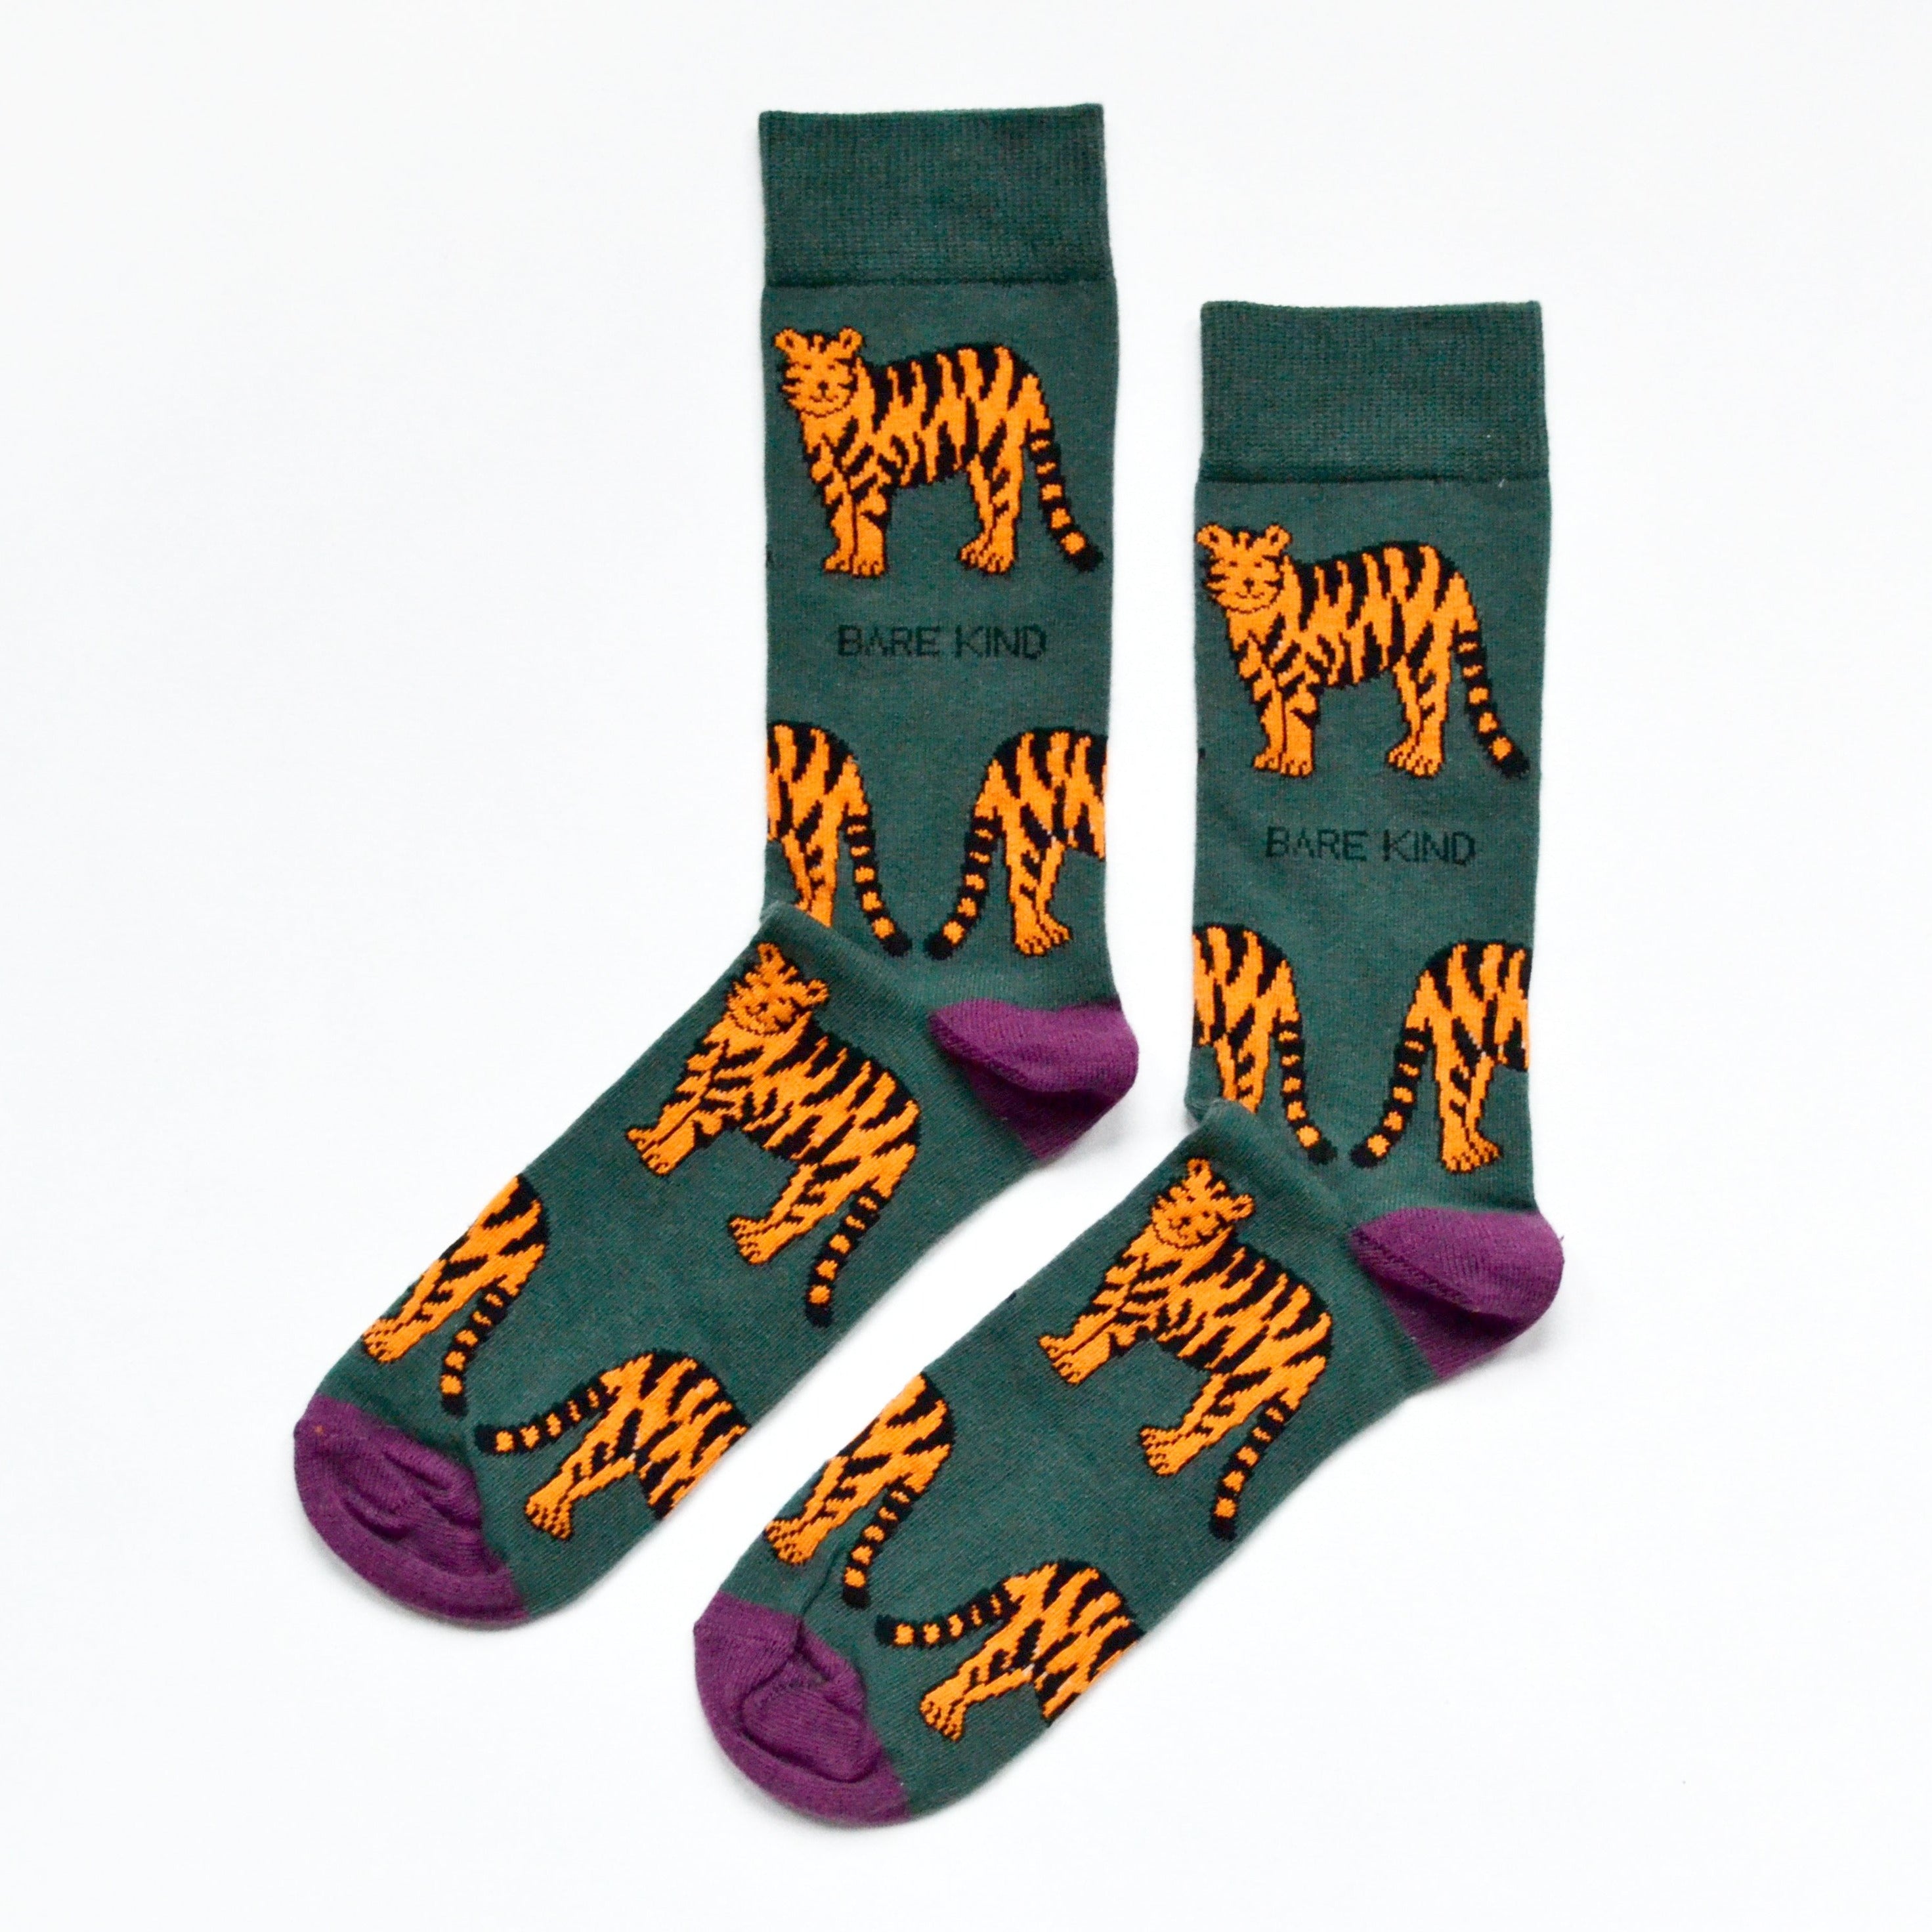 Bare Kind Bamboo Socks - Save the Tigers